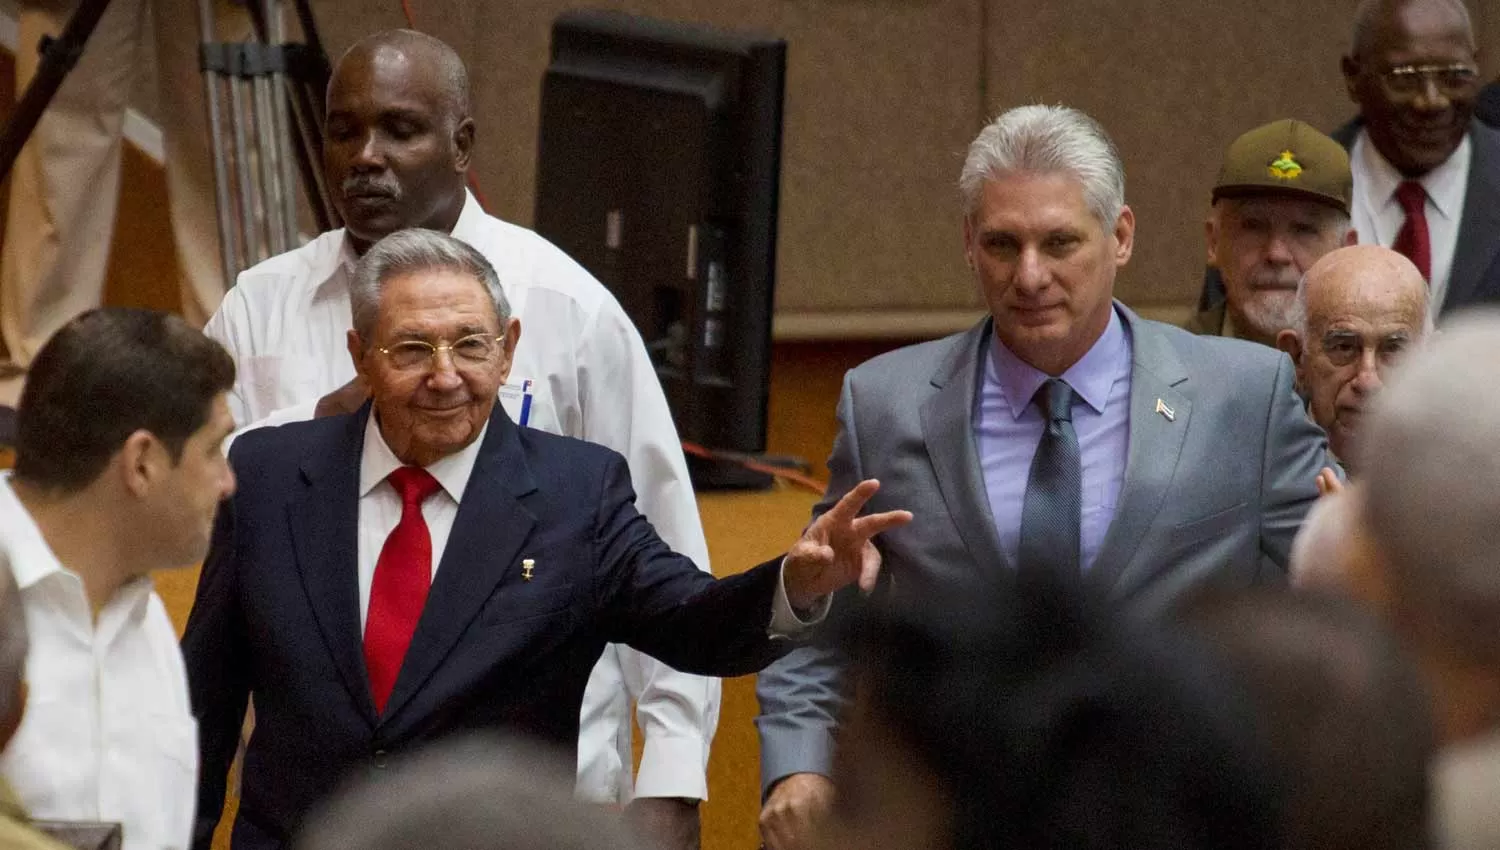 Díaz-Canel, de saco gris, será el sucesor de Raúl Castro. REUTERS